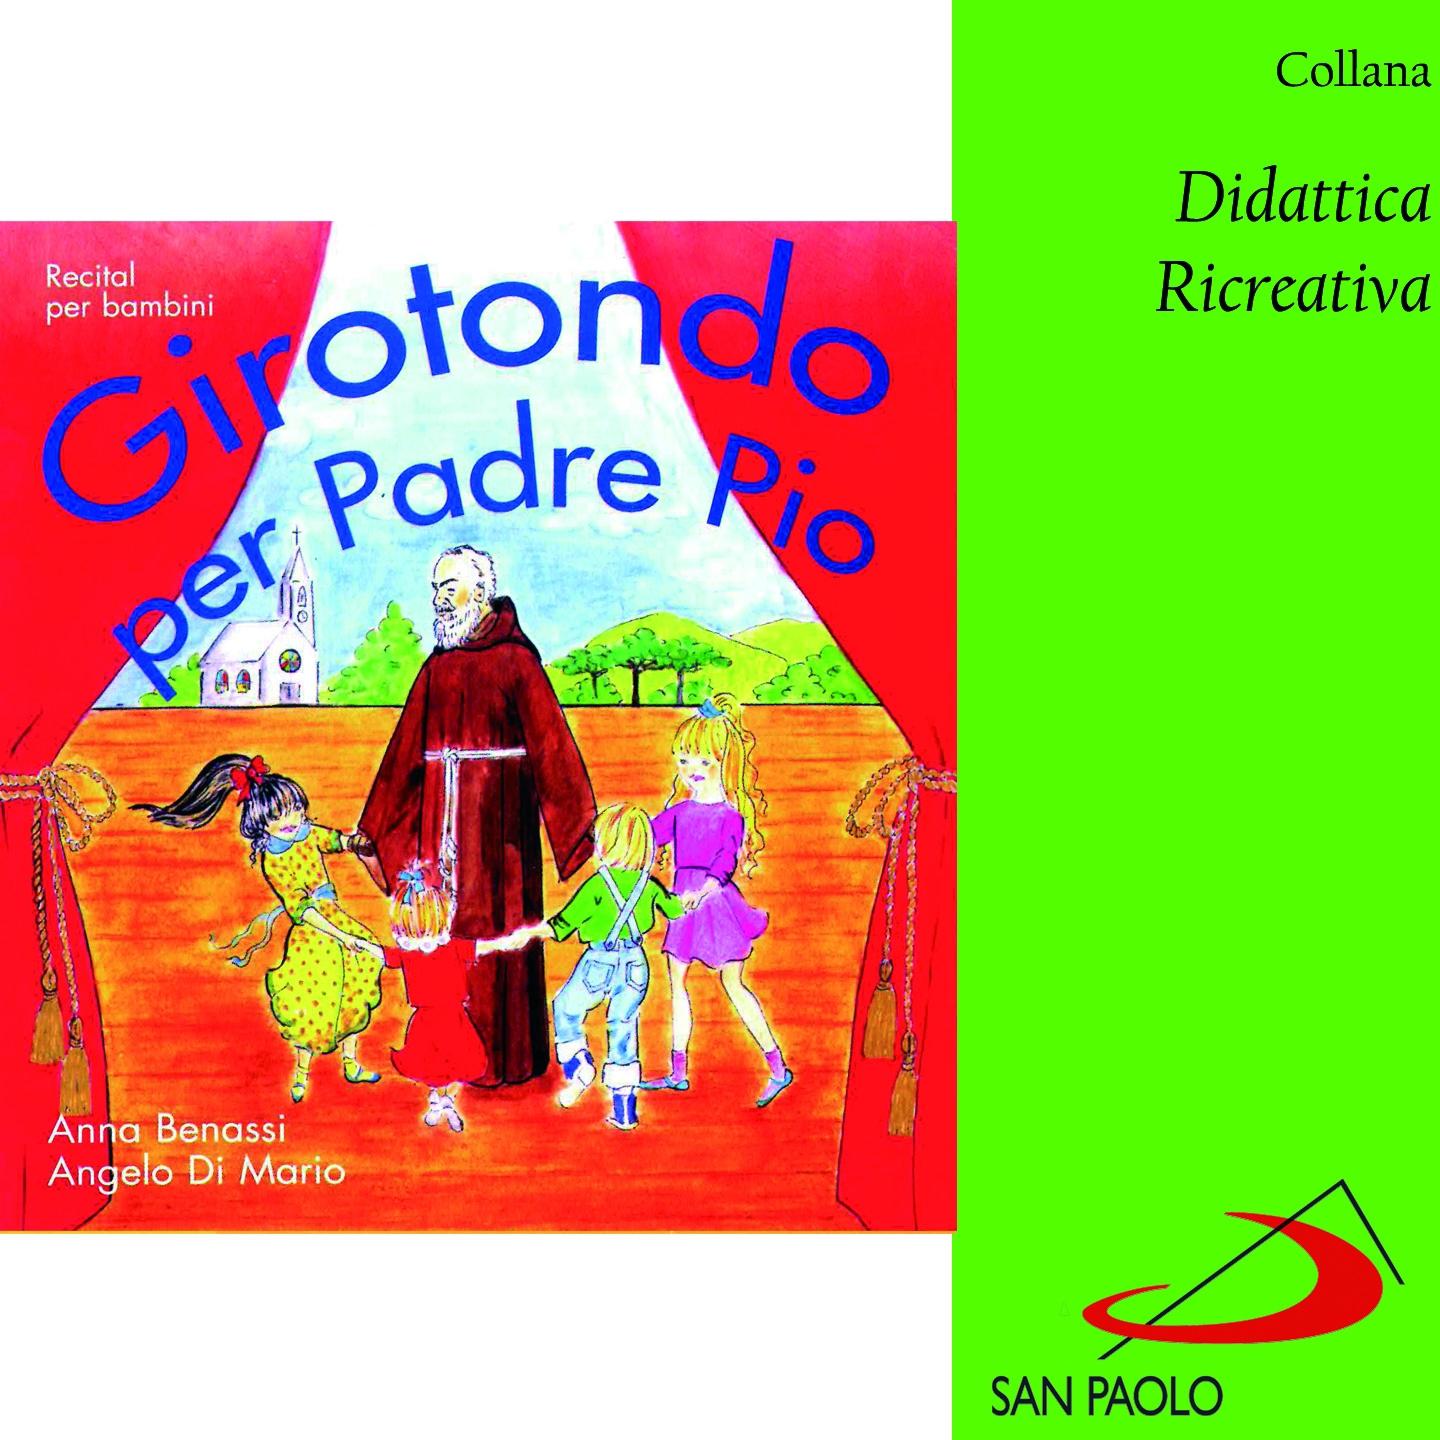 Постер альбома Collana didattica ricreativa: girotondo per padre pio